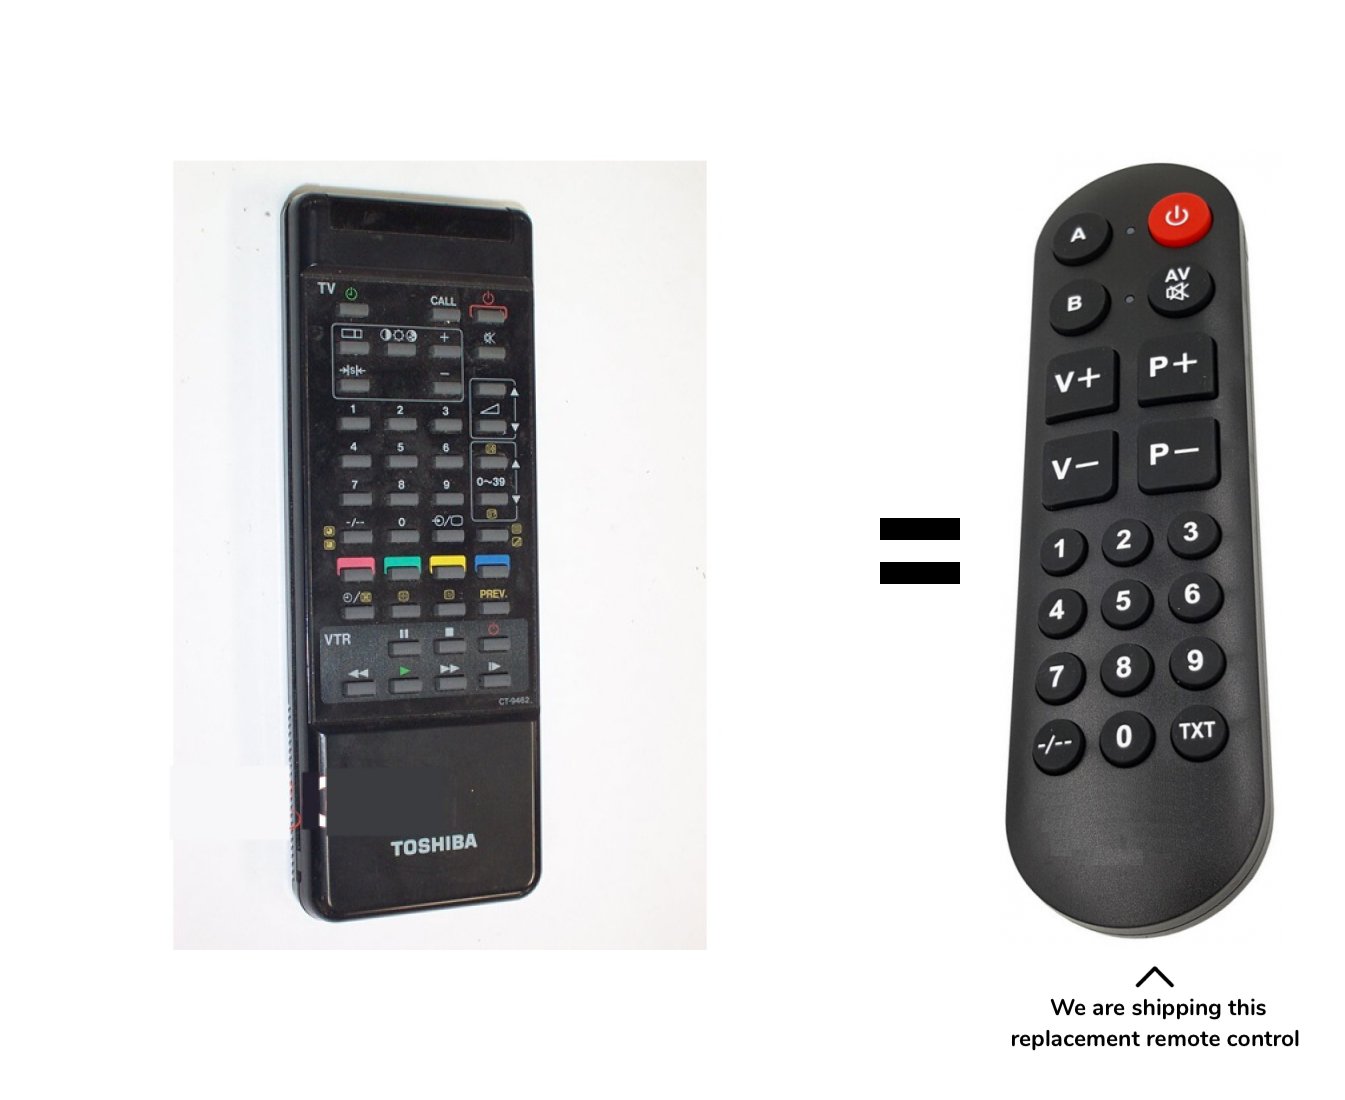 Toshiba 2104XS remote control for seniors